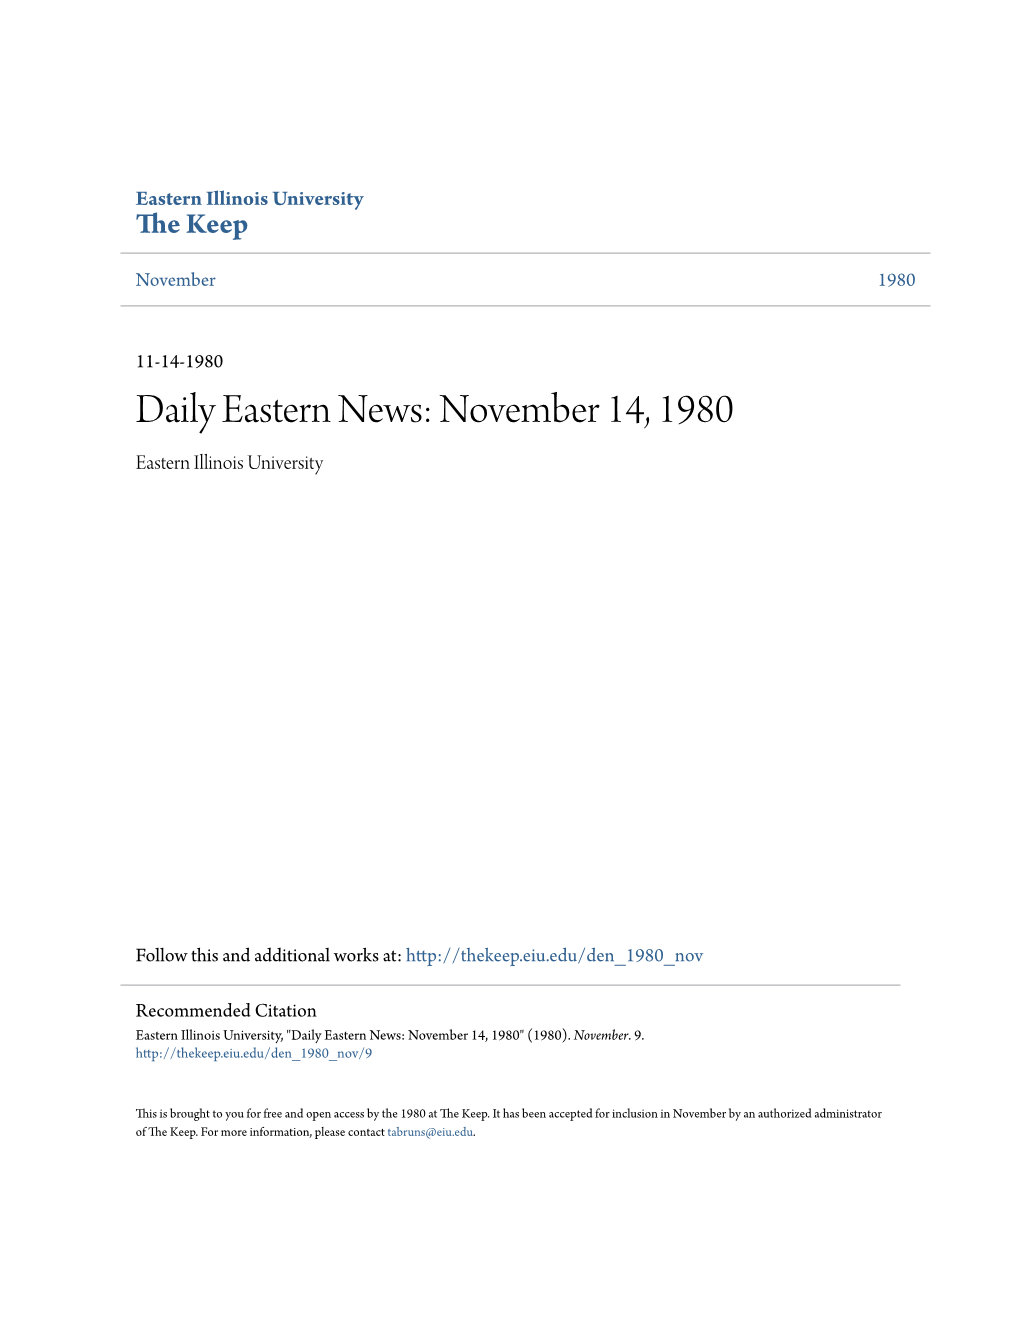 Eastern News: November 14, 1980 Eastern Illinois University